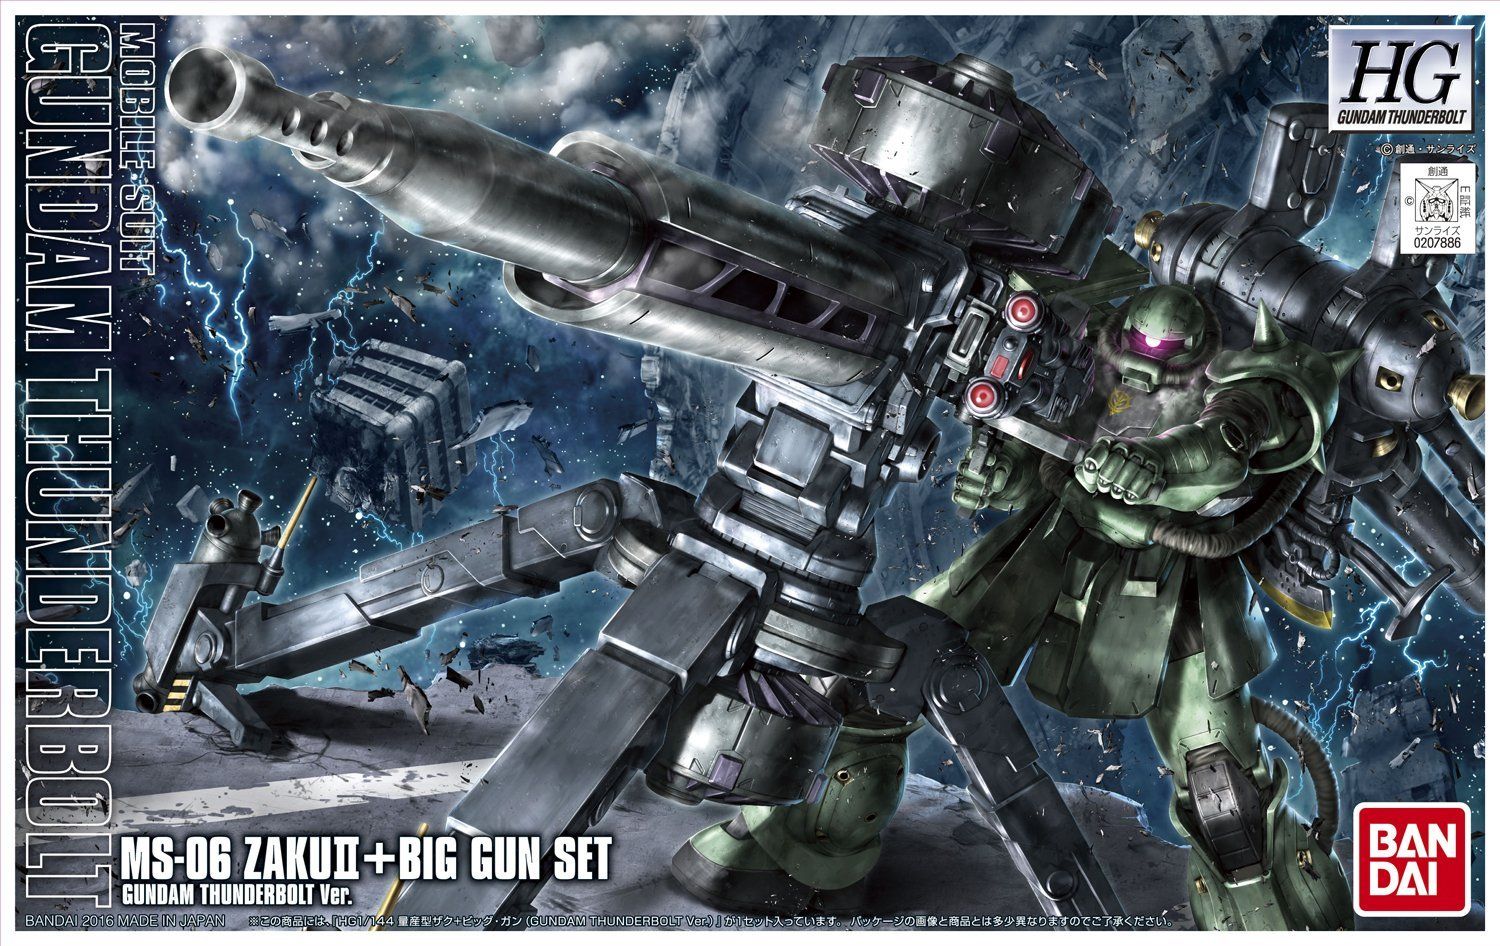 Bandai HG Gundam Thunderbolt Zaku II + Big Gun Set - BanzaiHobby